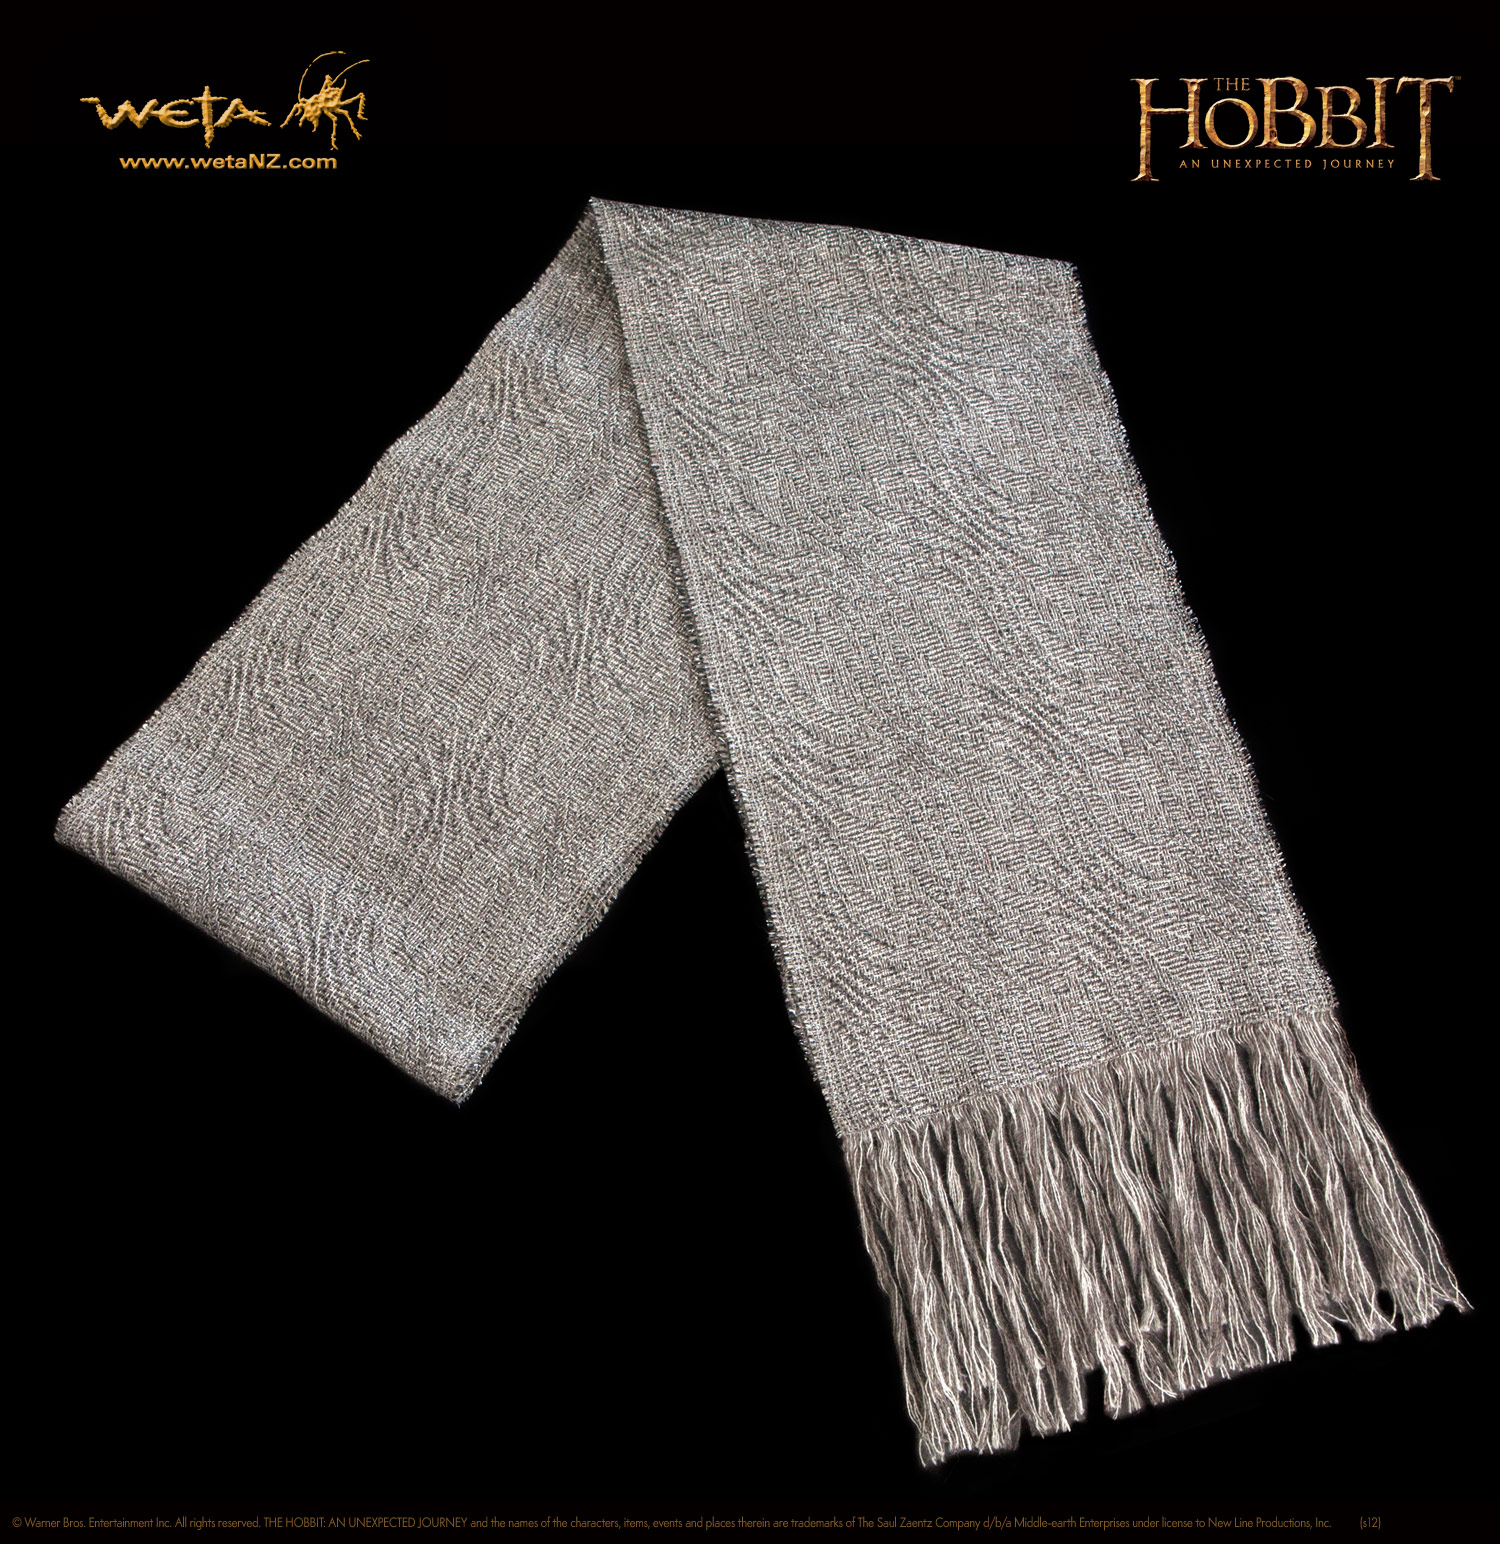 More Wearable ‘Hobbit’ Gear From Weta